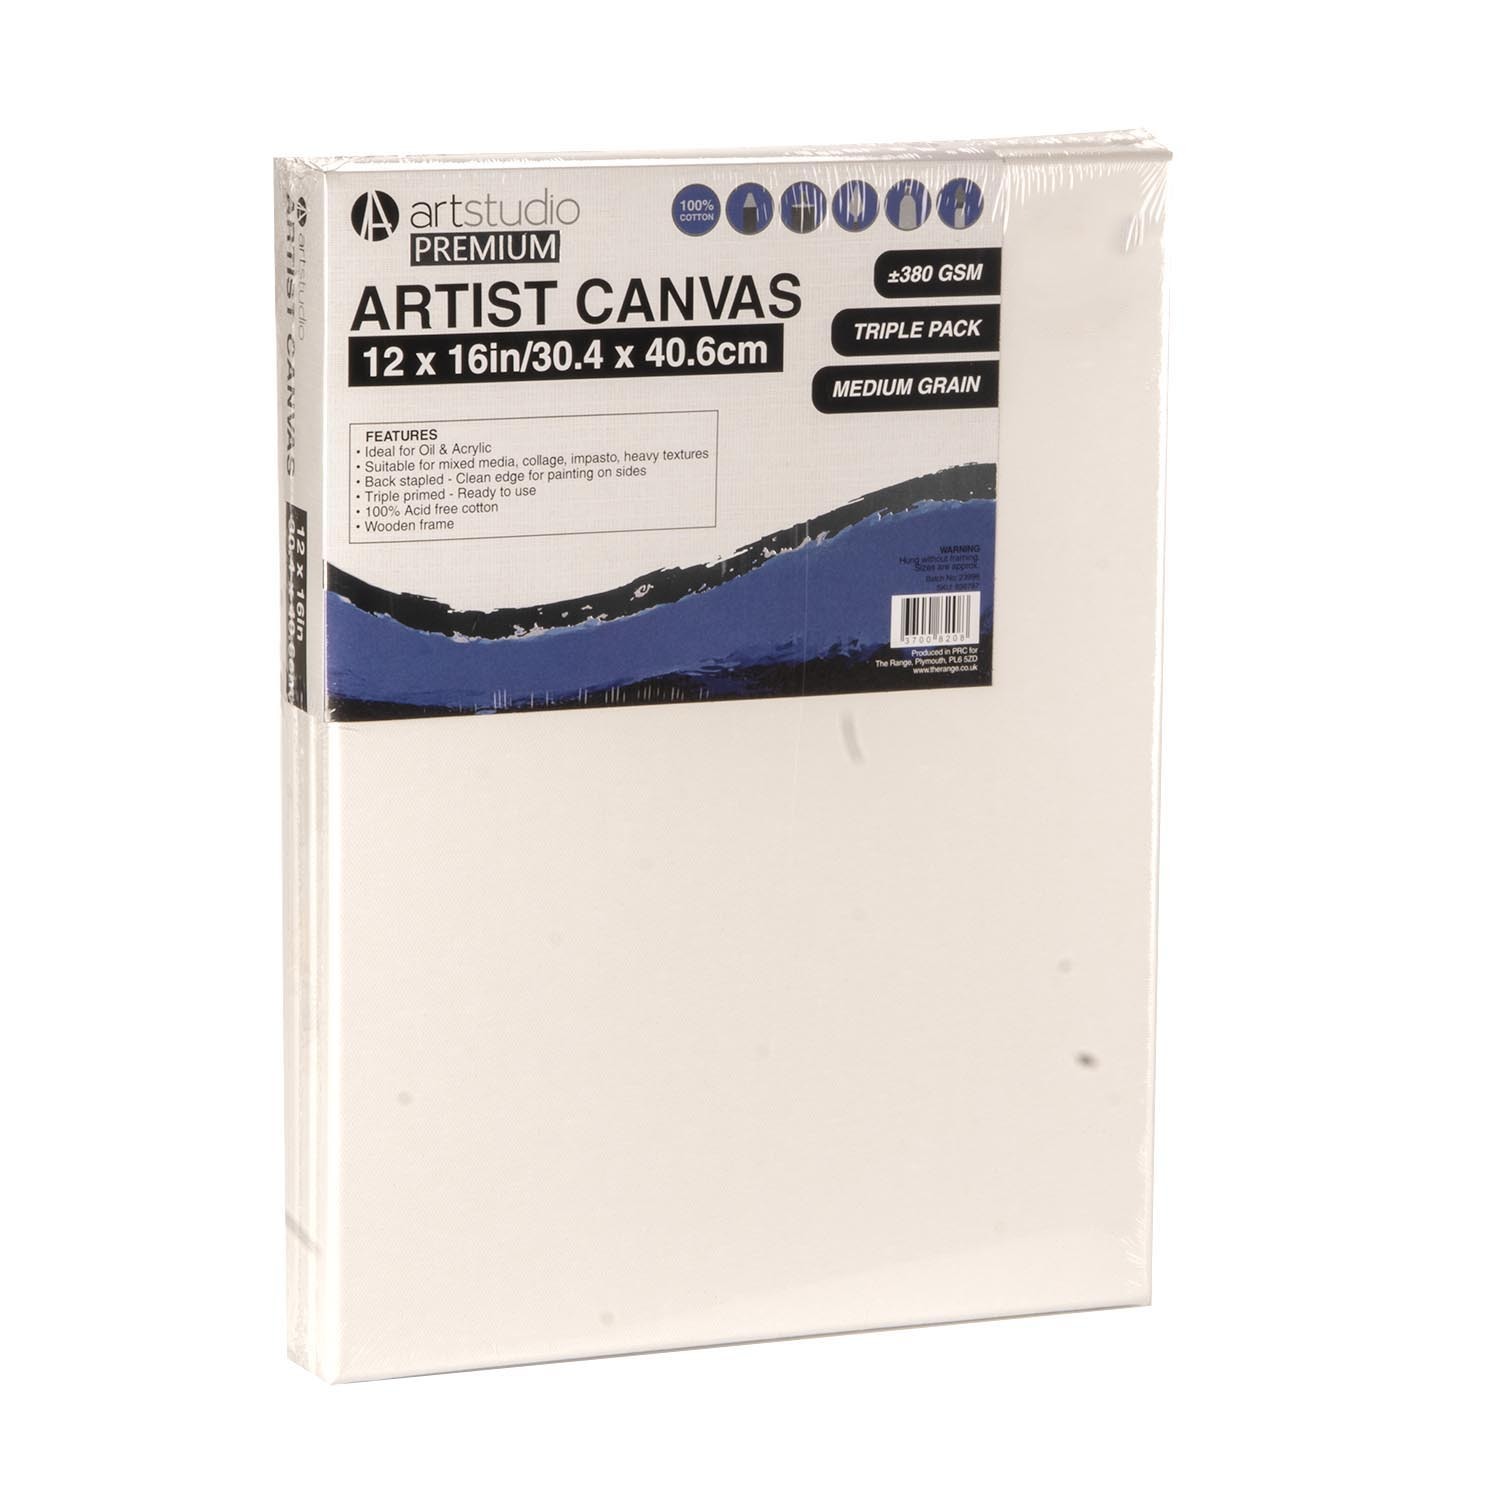 Art Studio Premium Artists Canvas 40.6 x 30.4cm 3 Pack Image 2